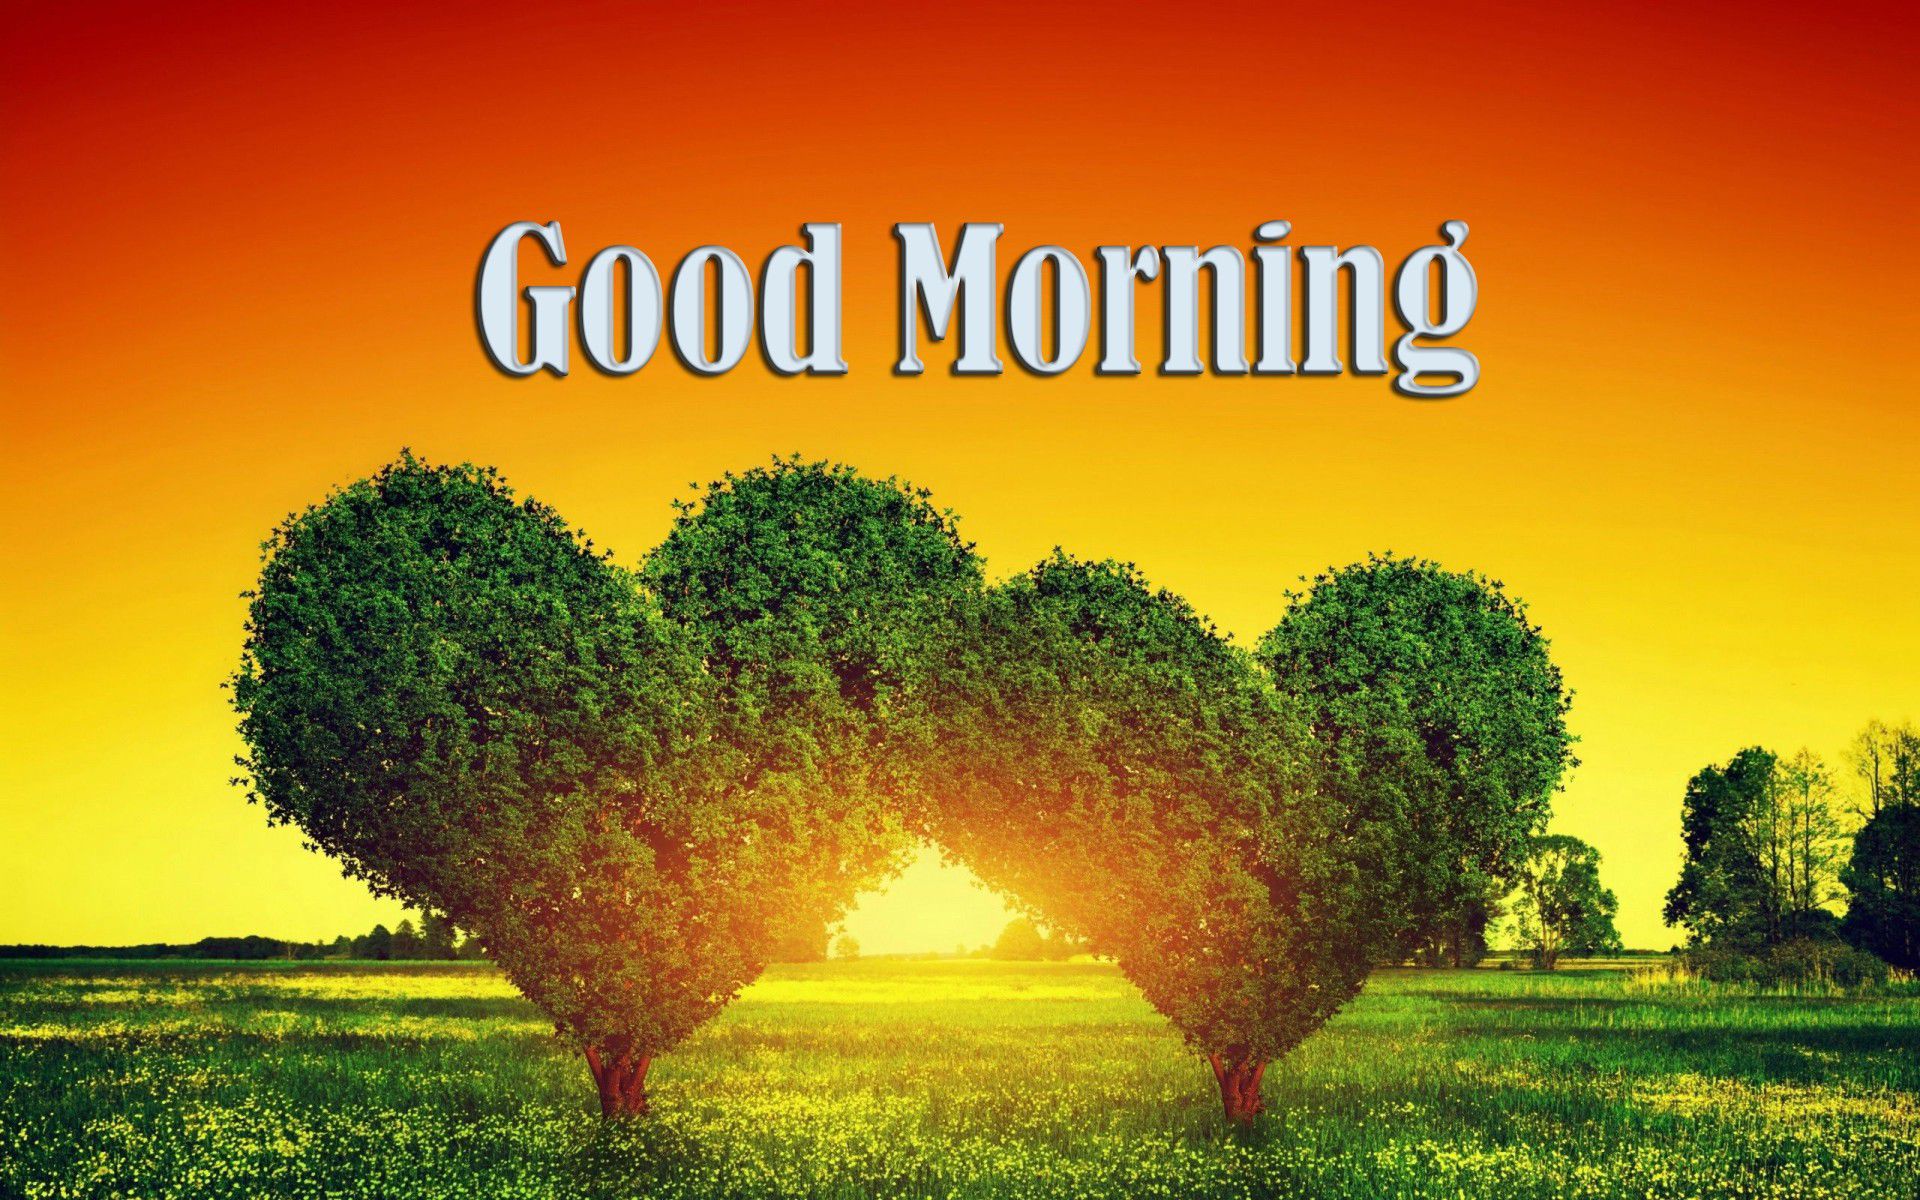 good morning wallpaper free download,natural landscape,nature,grass,tree,morning